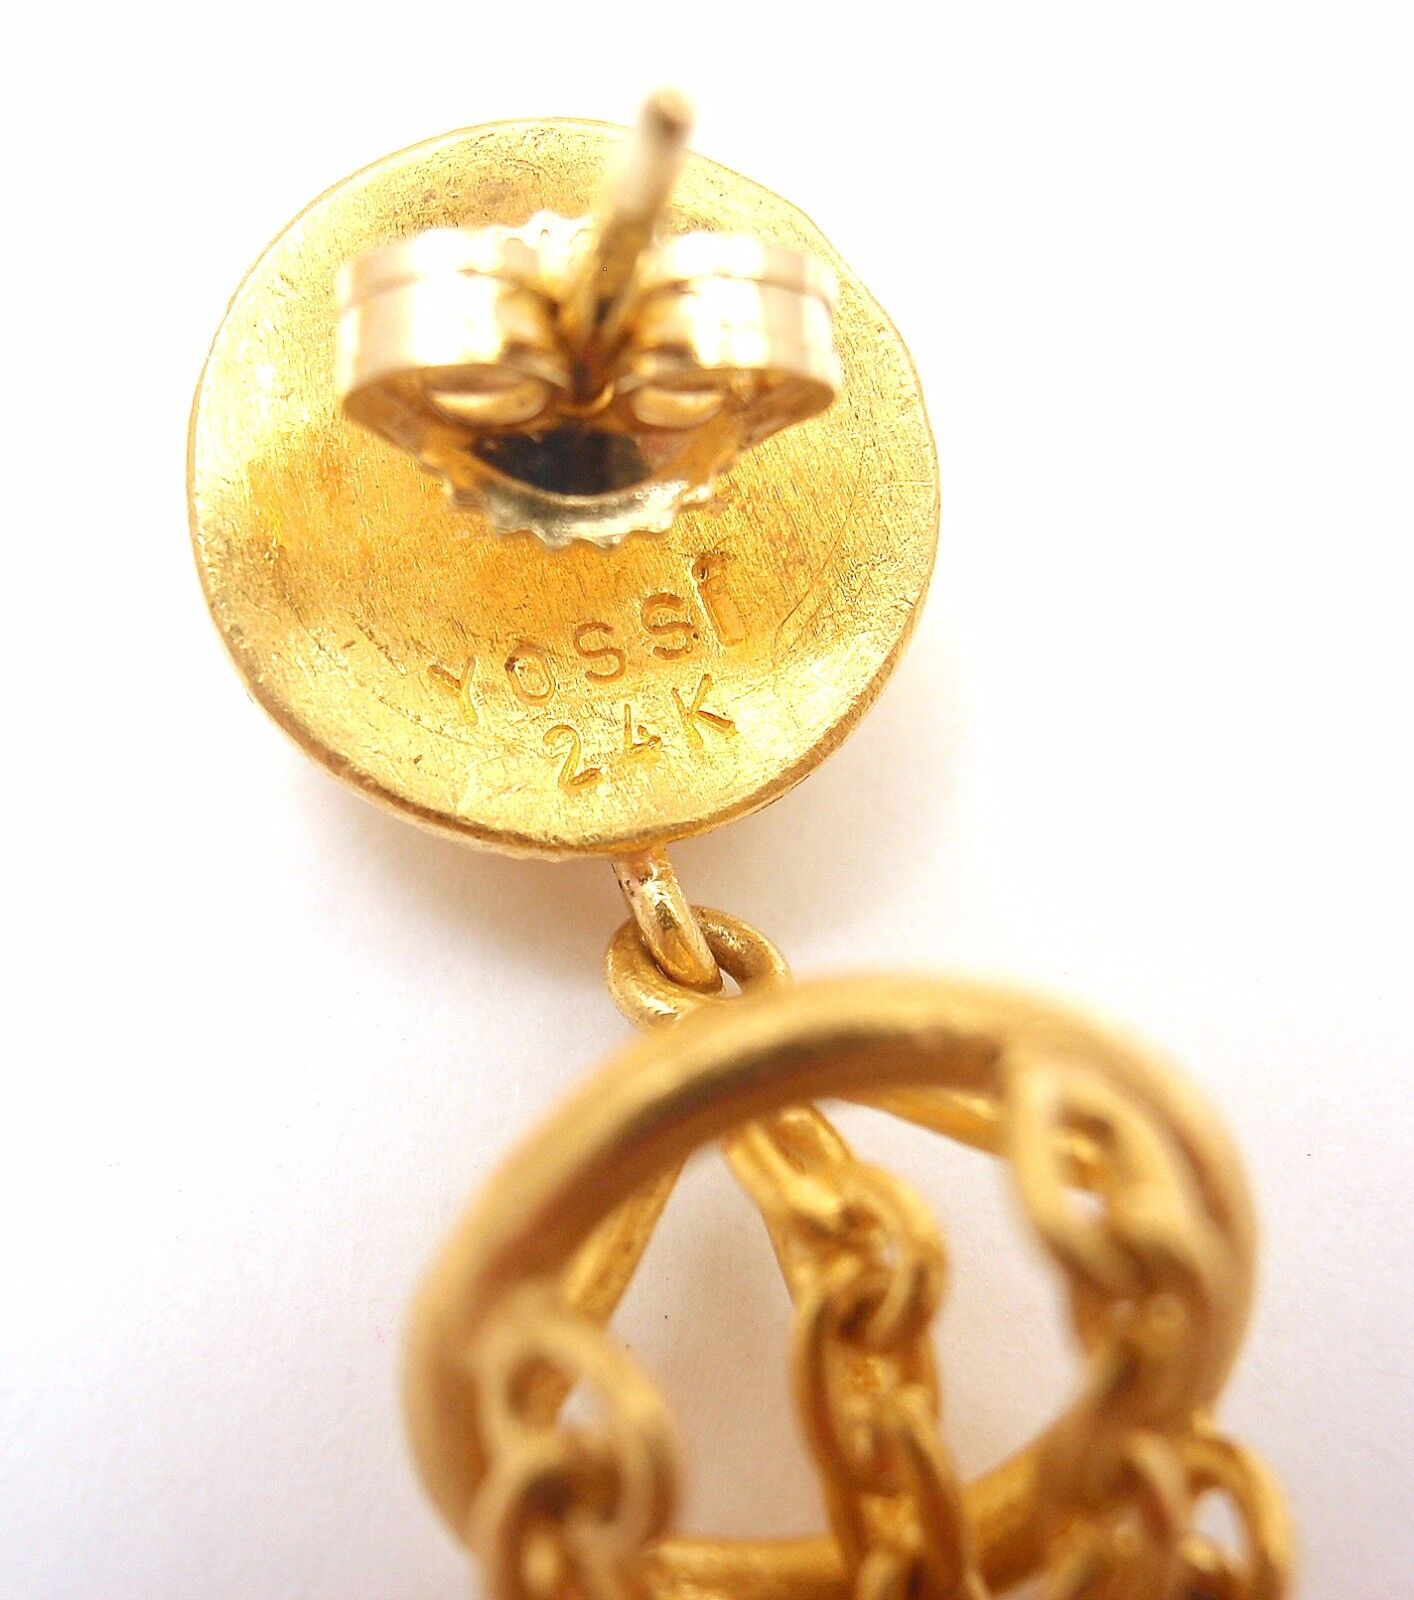 Yossi Harari Jewelry & Watches:Fine Jewelry:Earrings Authentic! Yossi Harari 24k Yellow Gold Citrine Gemstone Drop Earrings